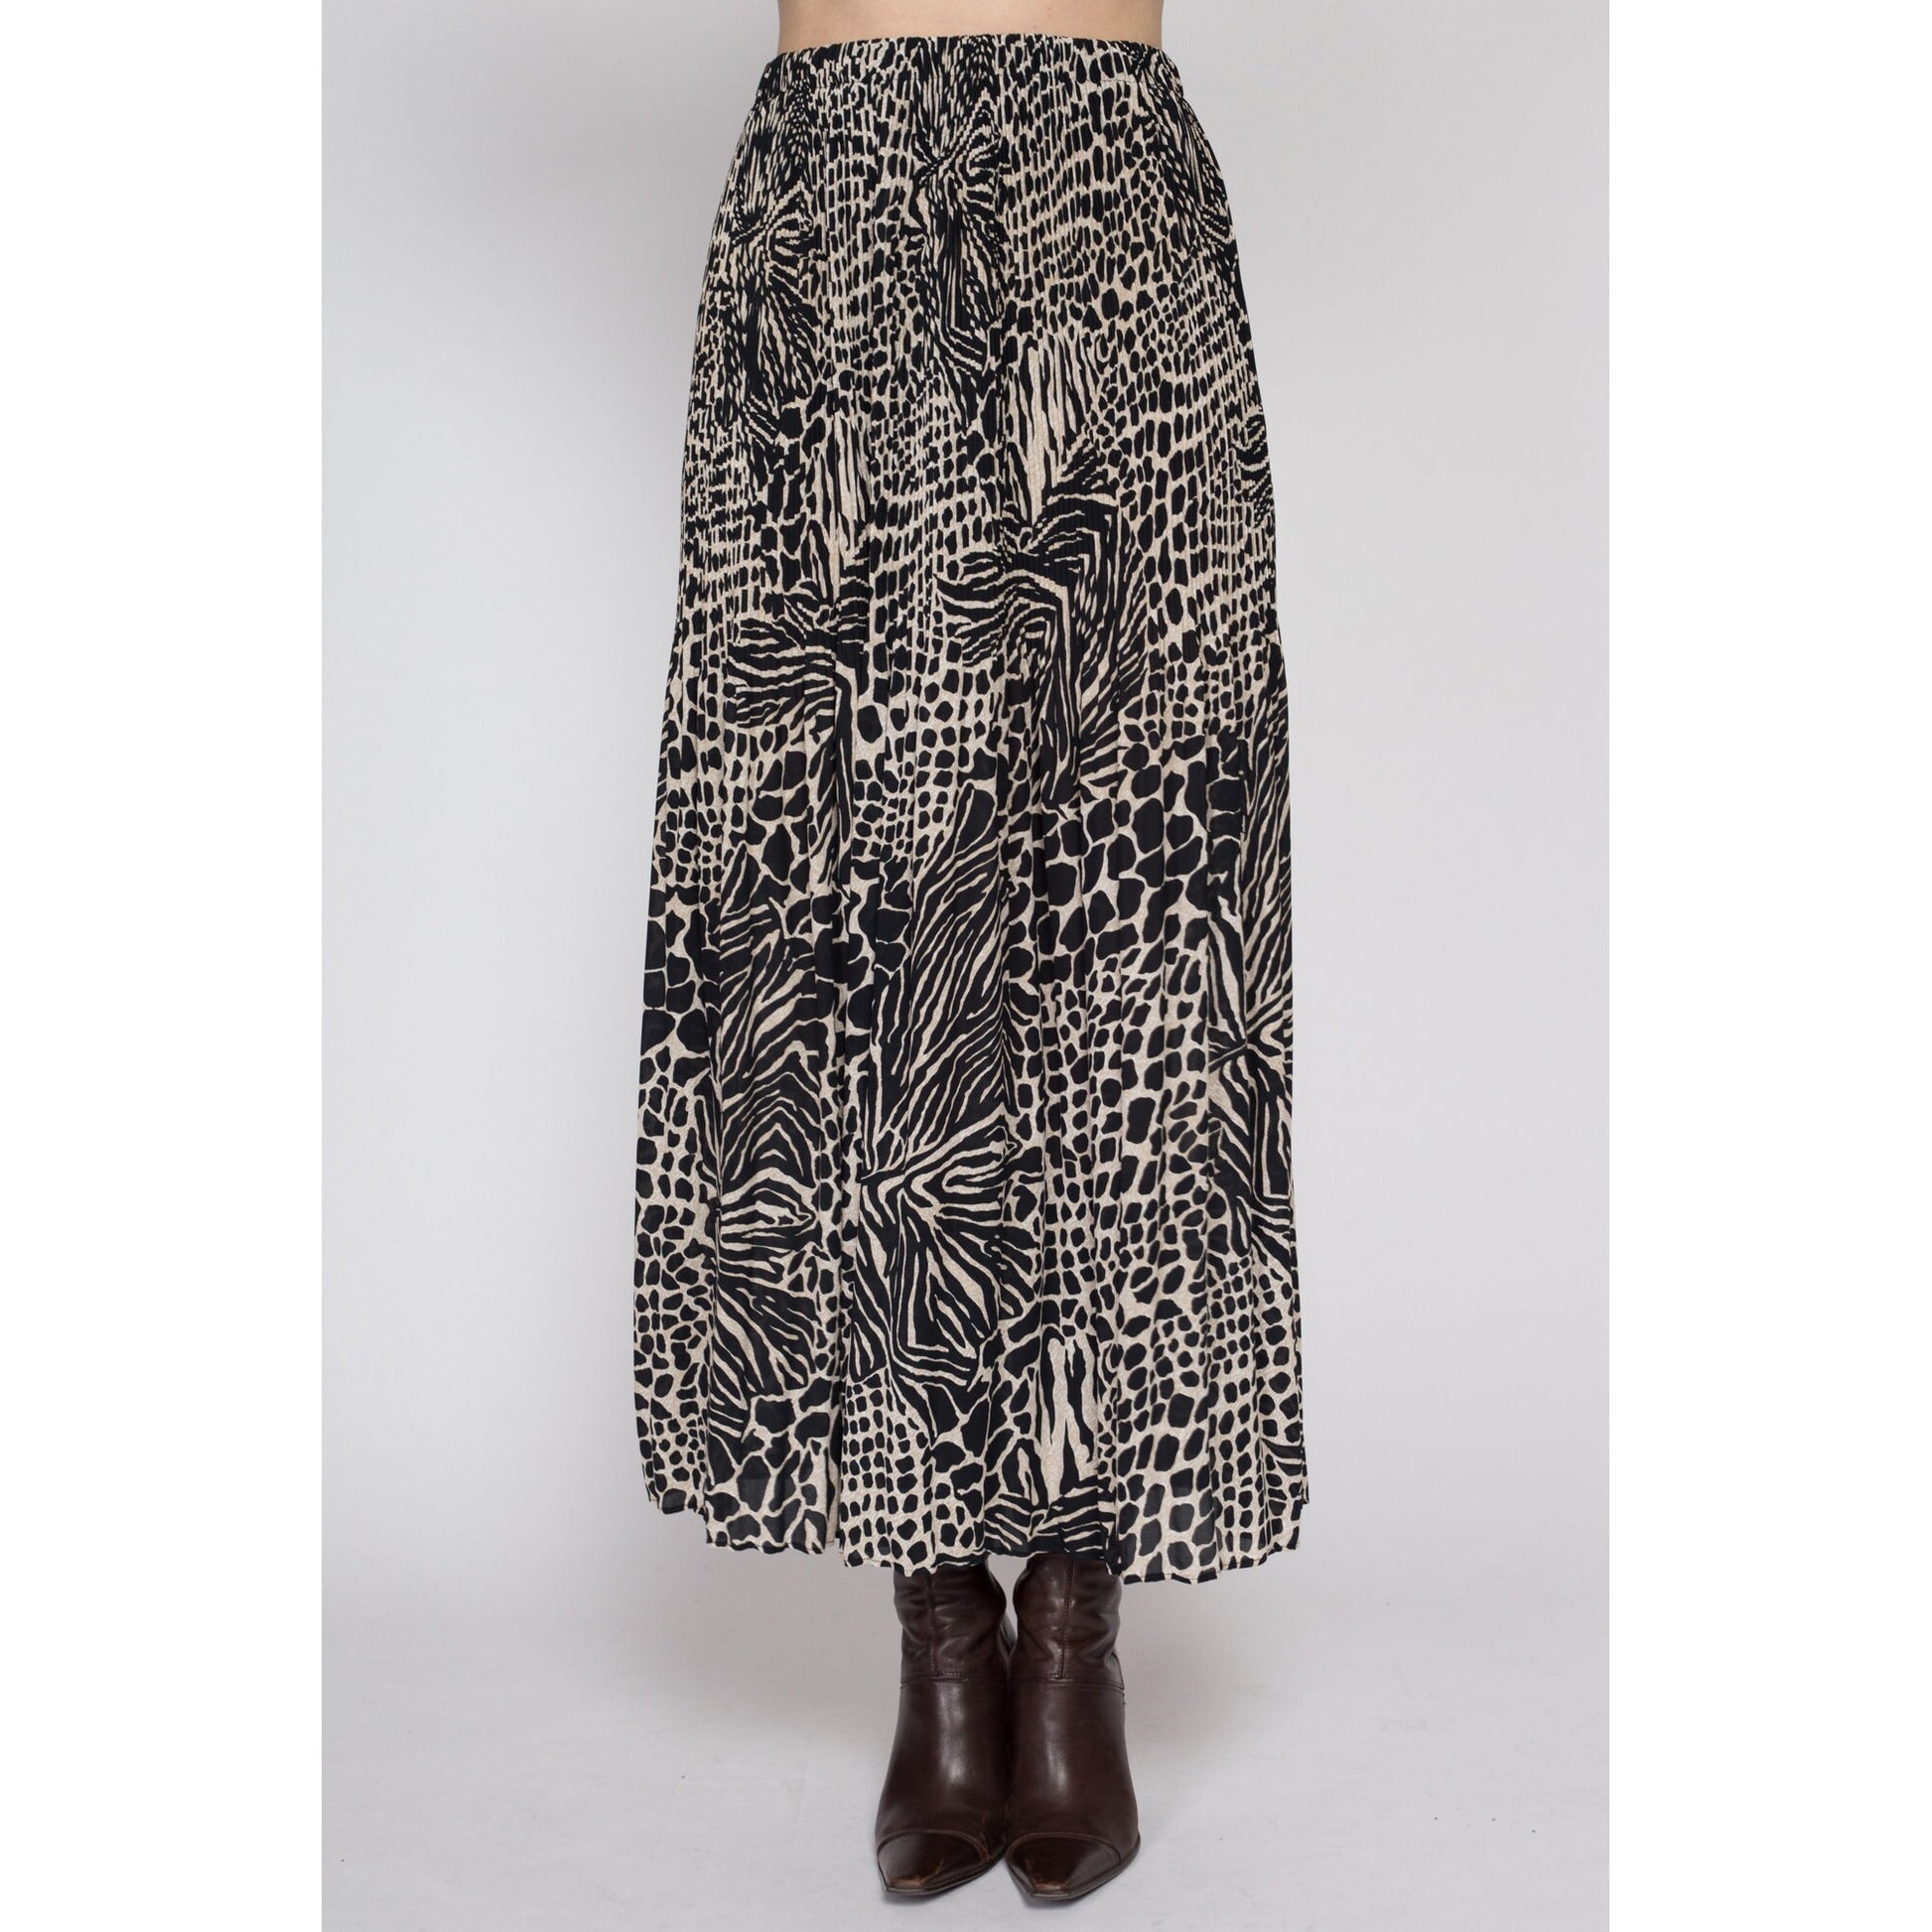 Medium 90s Animal Print Pleated Maxi Skirt | Vintage Boho Black & White High Waisted Flowy Skirt